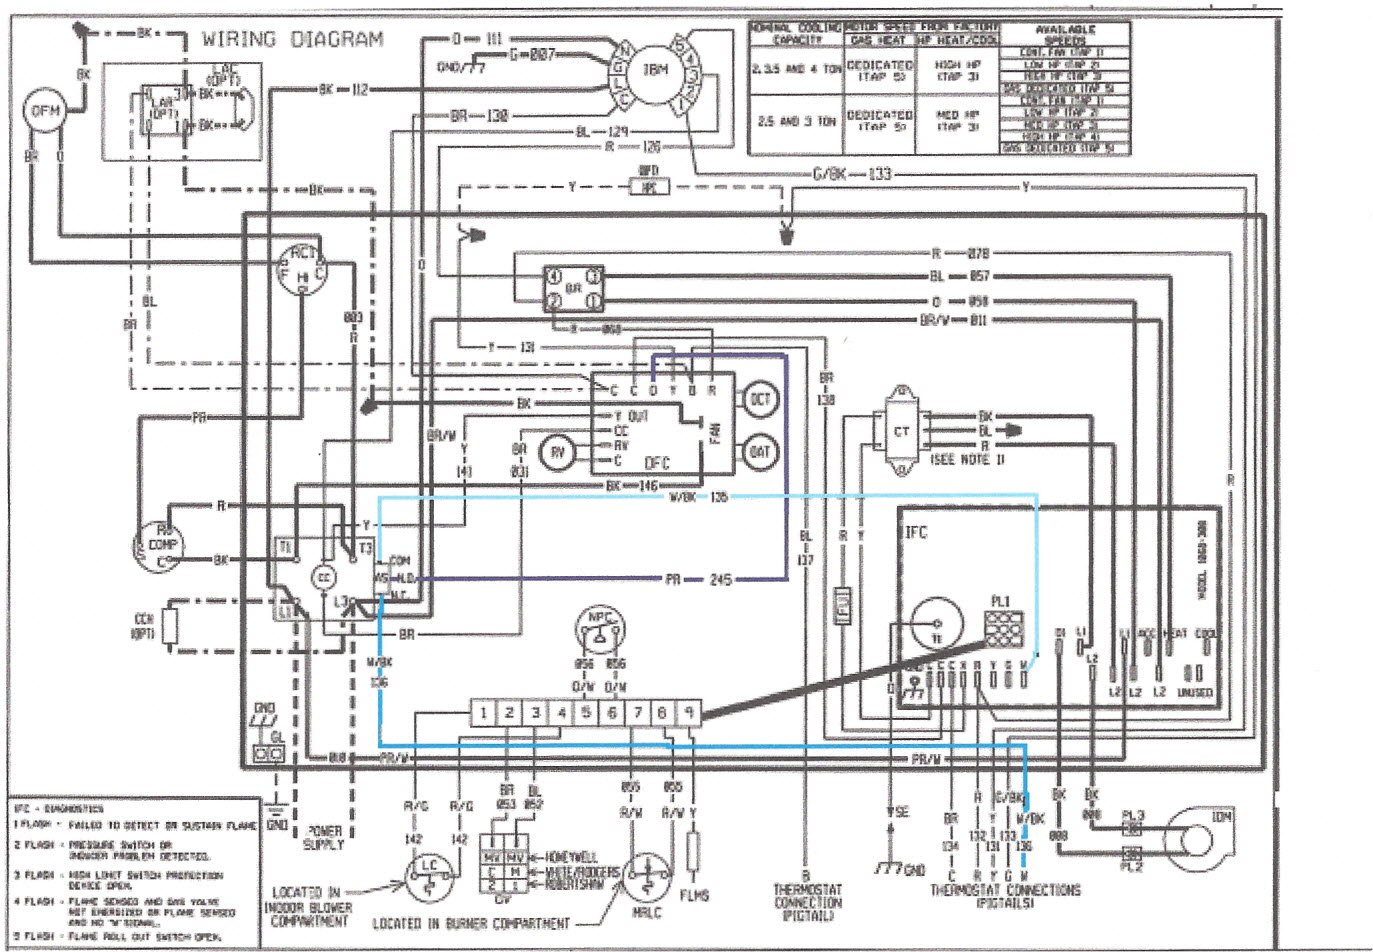 Heat Pump Wiring Diagram View - Wiring Diagrams Thumbs - Heat Pump Wiring Diagram Schematic